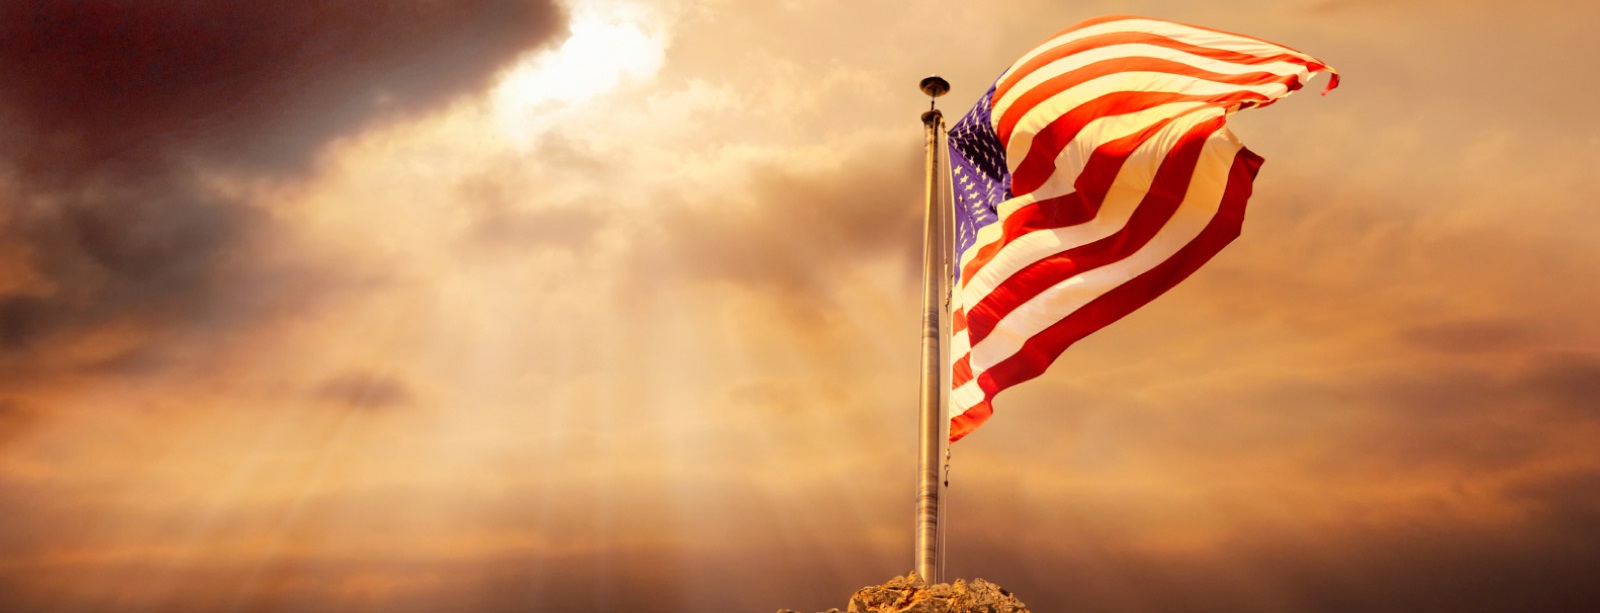 US flag waving in sun rays